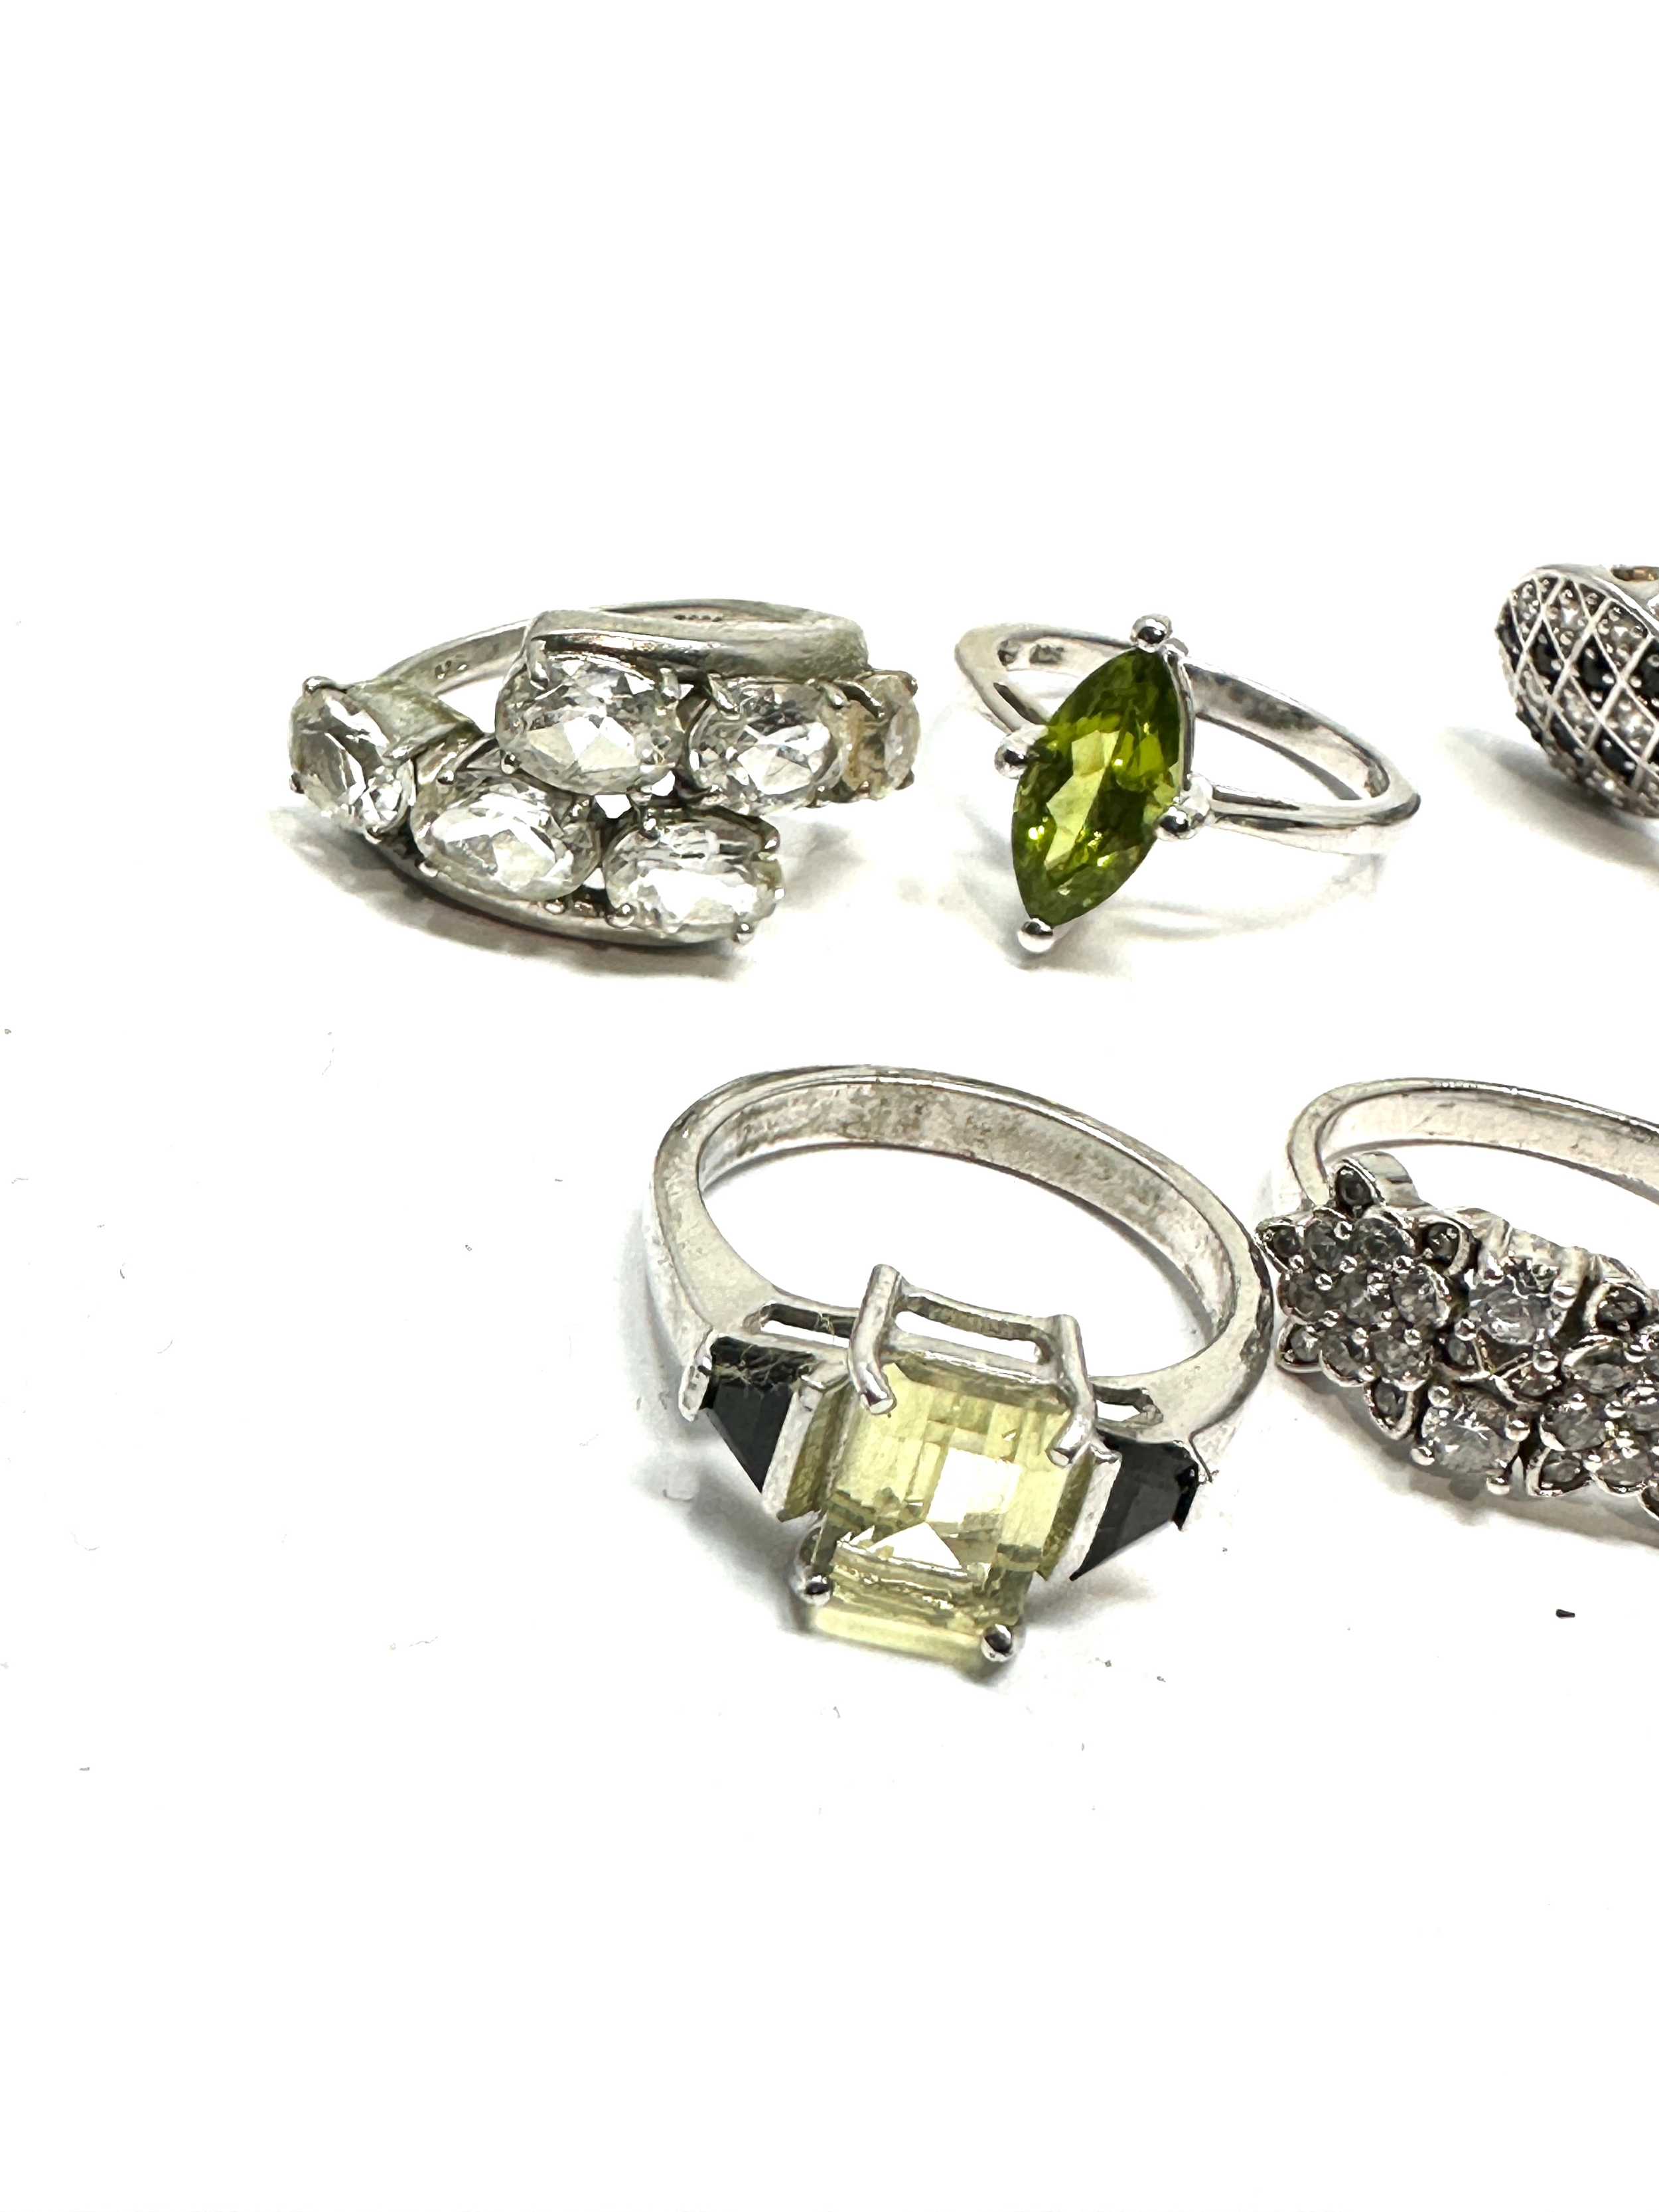 6 silver gemstone set rings - Image 2 of 3